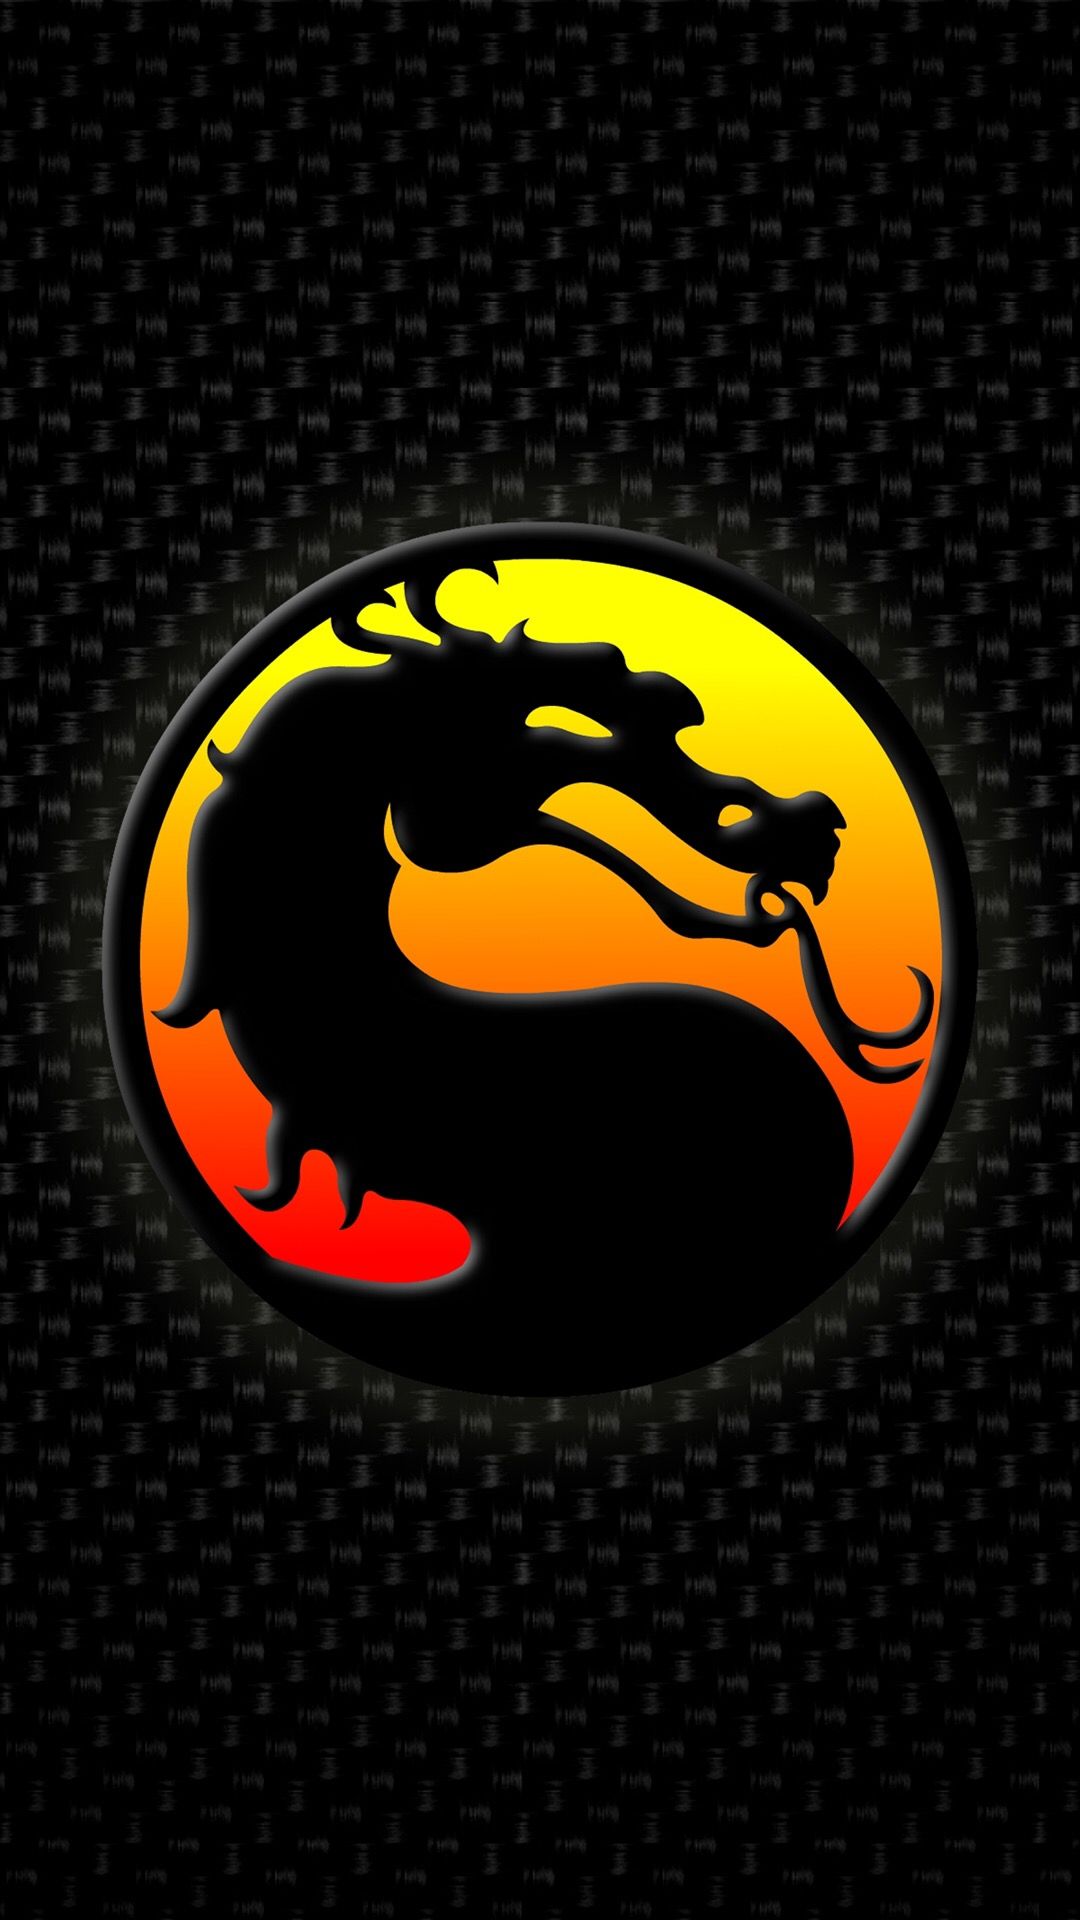 Mortal Kombat logo wallpaper MK11 2019 Logos Mortal Kombat